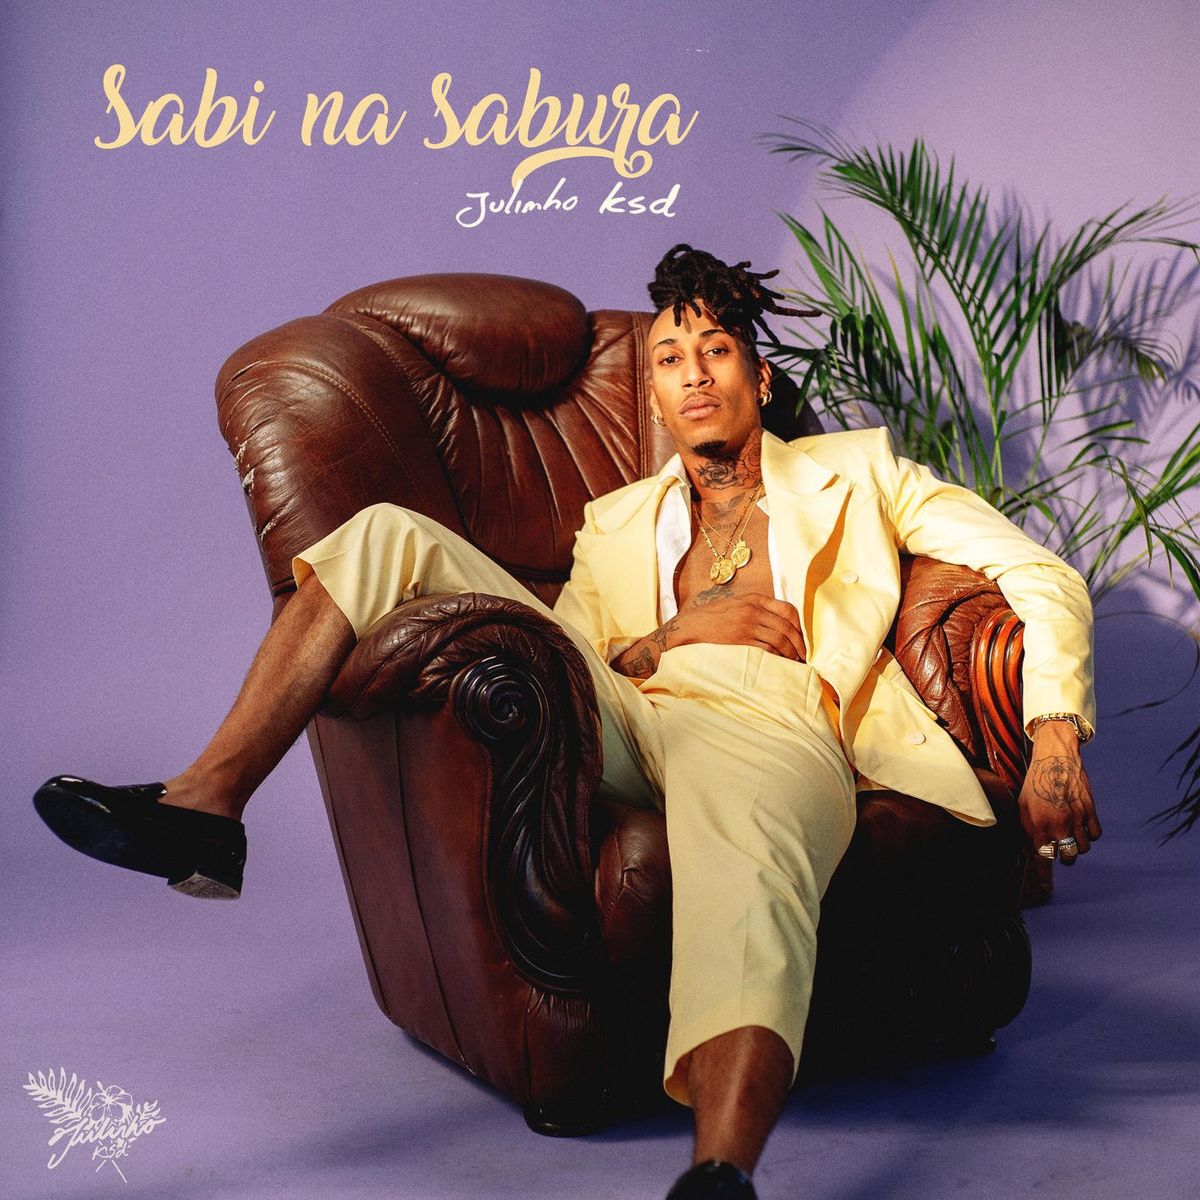 Julinho Ksd – Sabi na Sabura (Álbum)